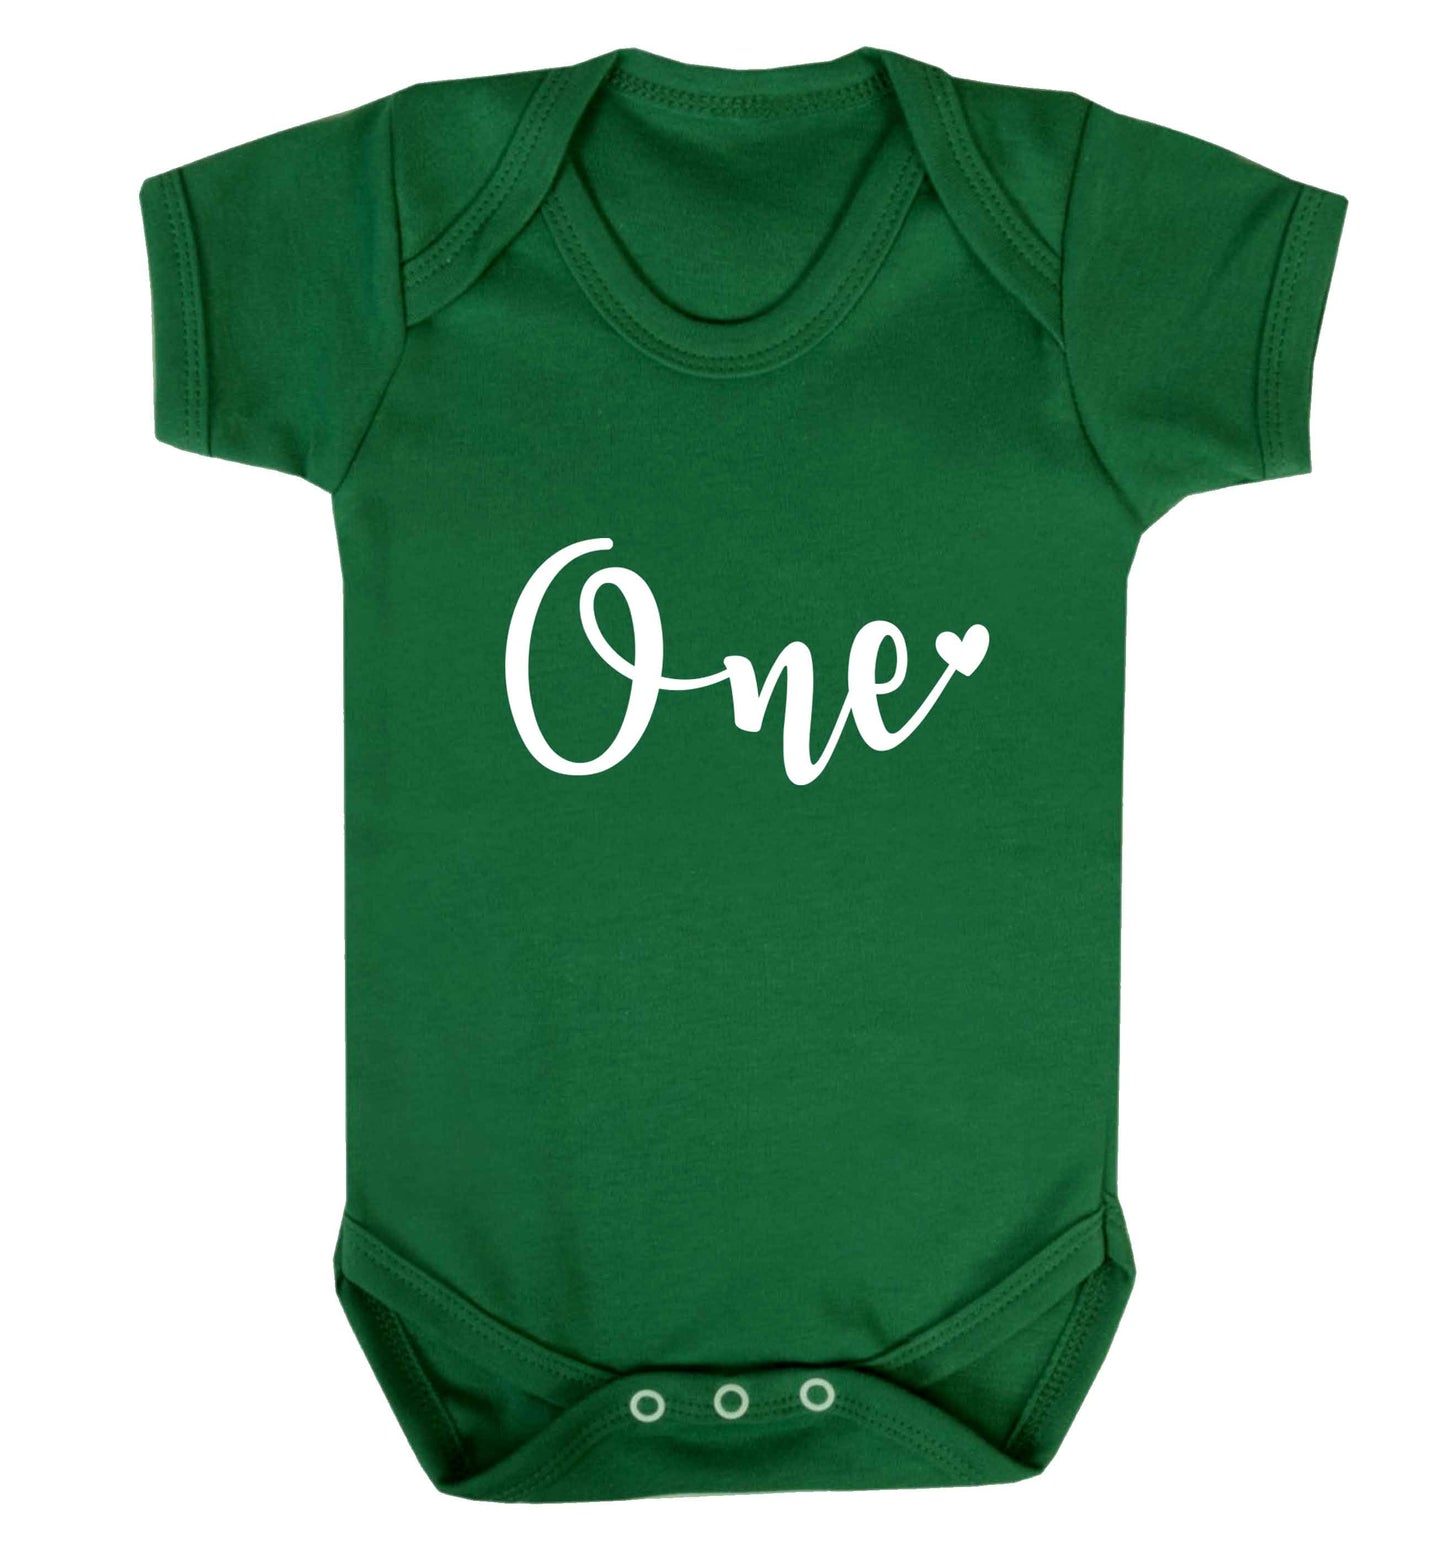 One baby vest green 18-24 months